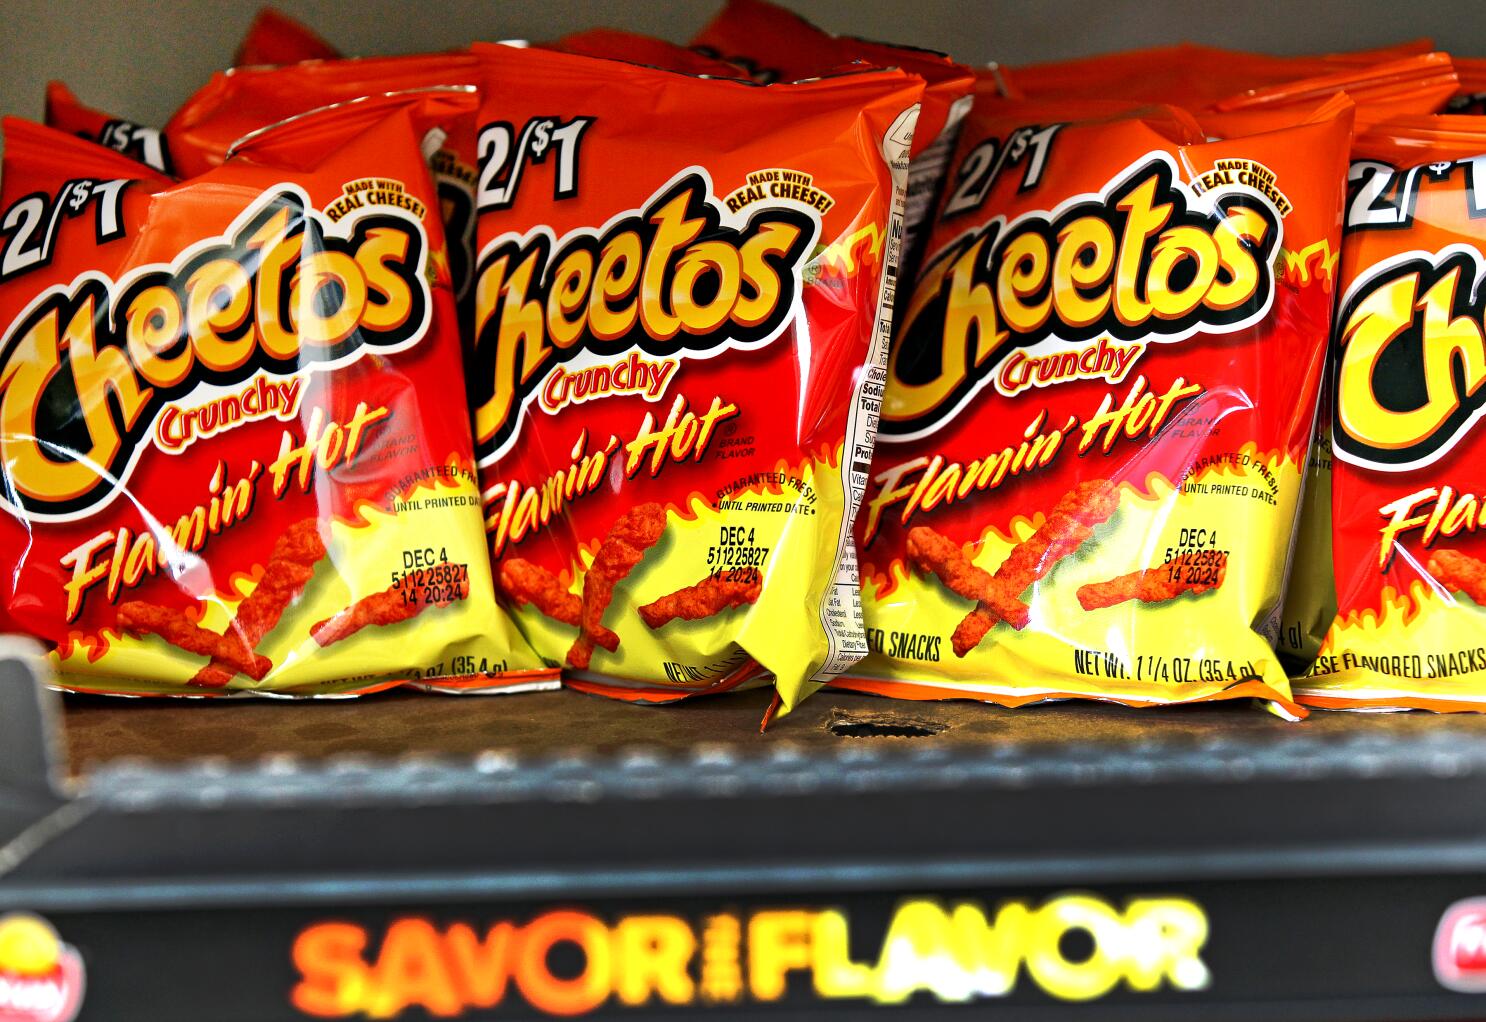 Flamin' Hot Cheetos: The Humble Beginnings of a Junk Food